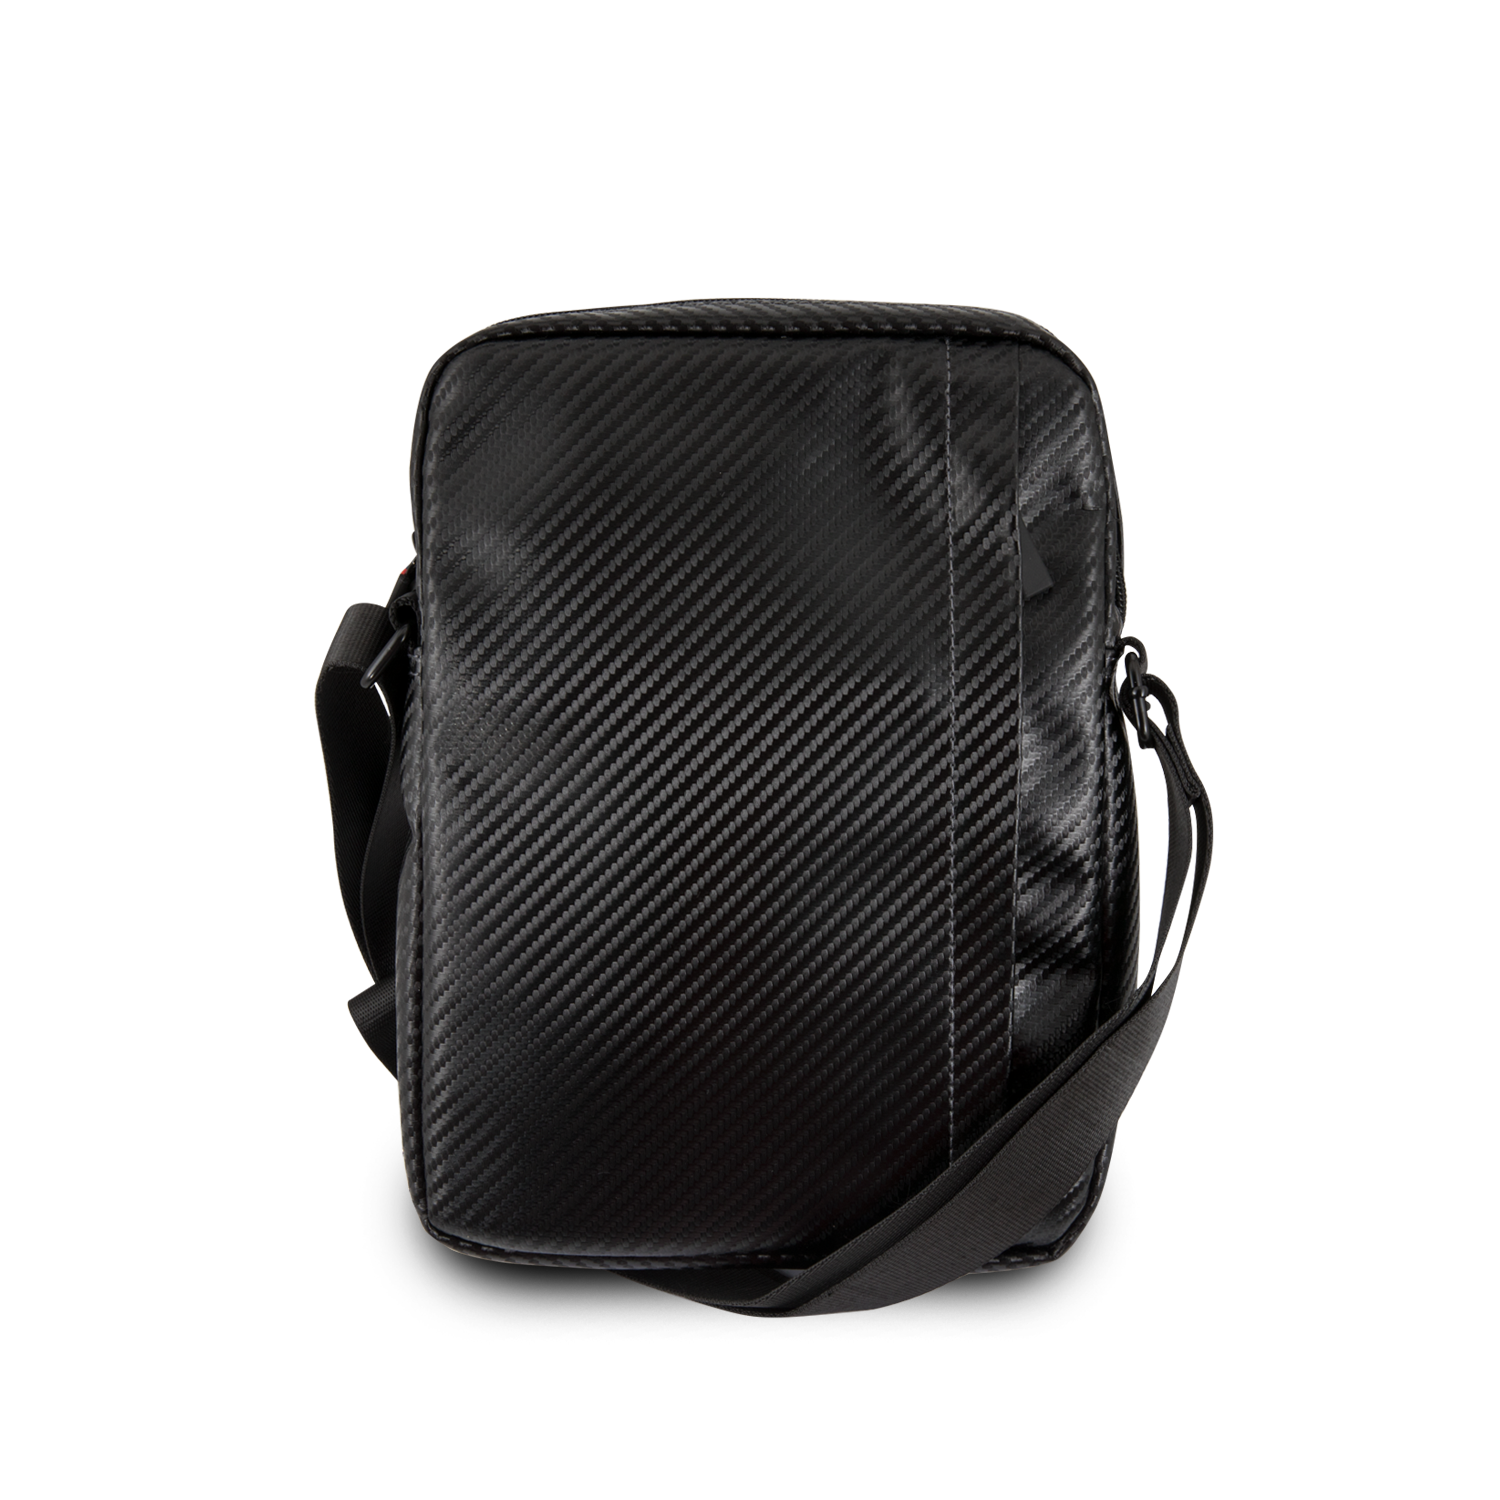 Carbon Briefcase S - Luxury Business Bags for Men | Porsche Design |  Porsche Design